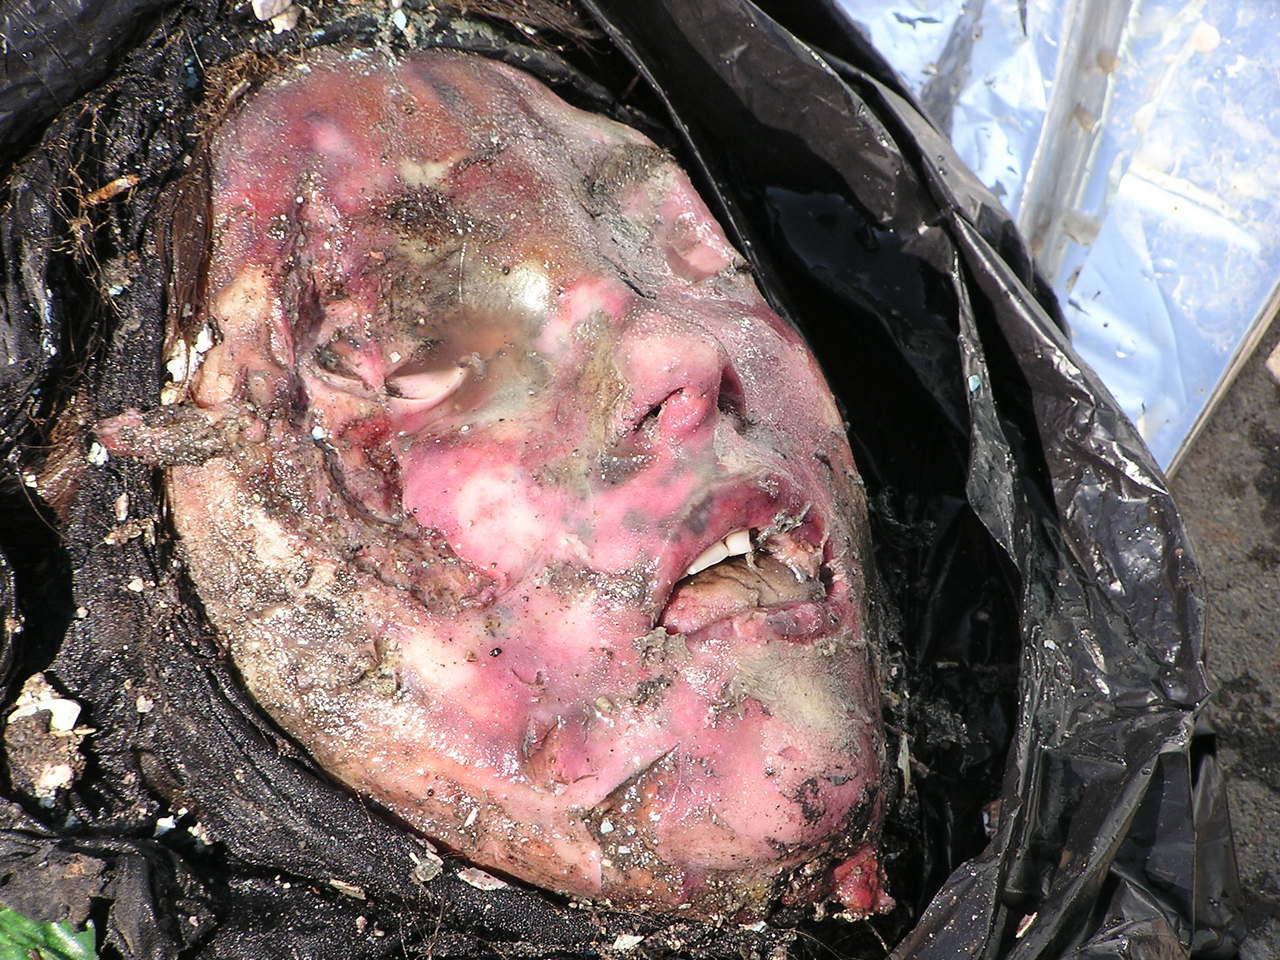 Beslan. The corpse of a terrorist